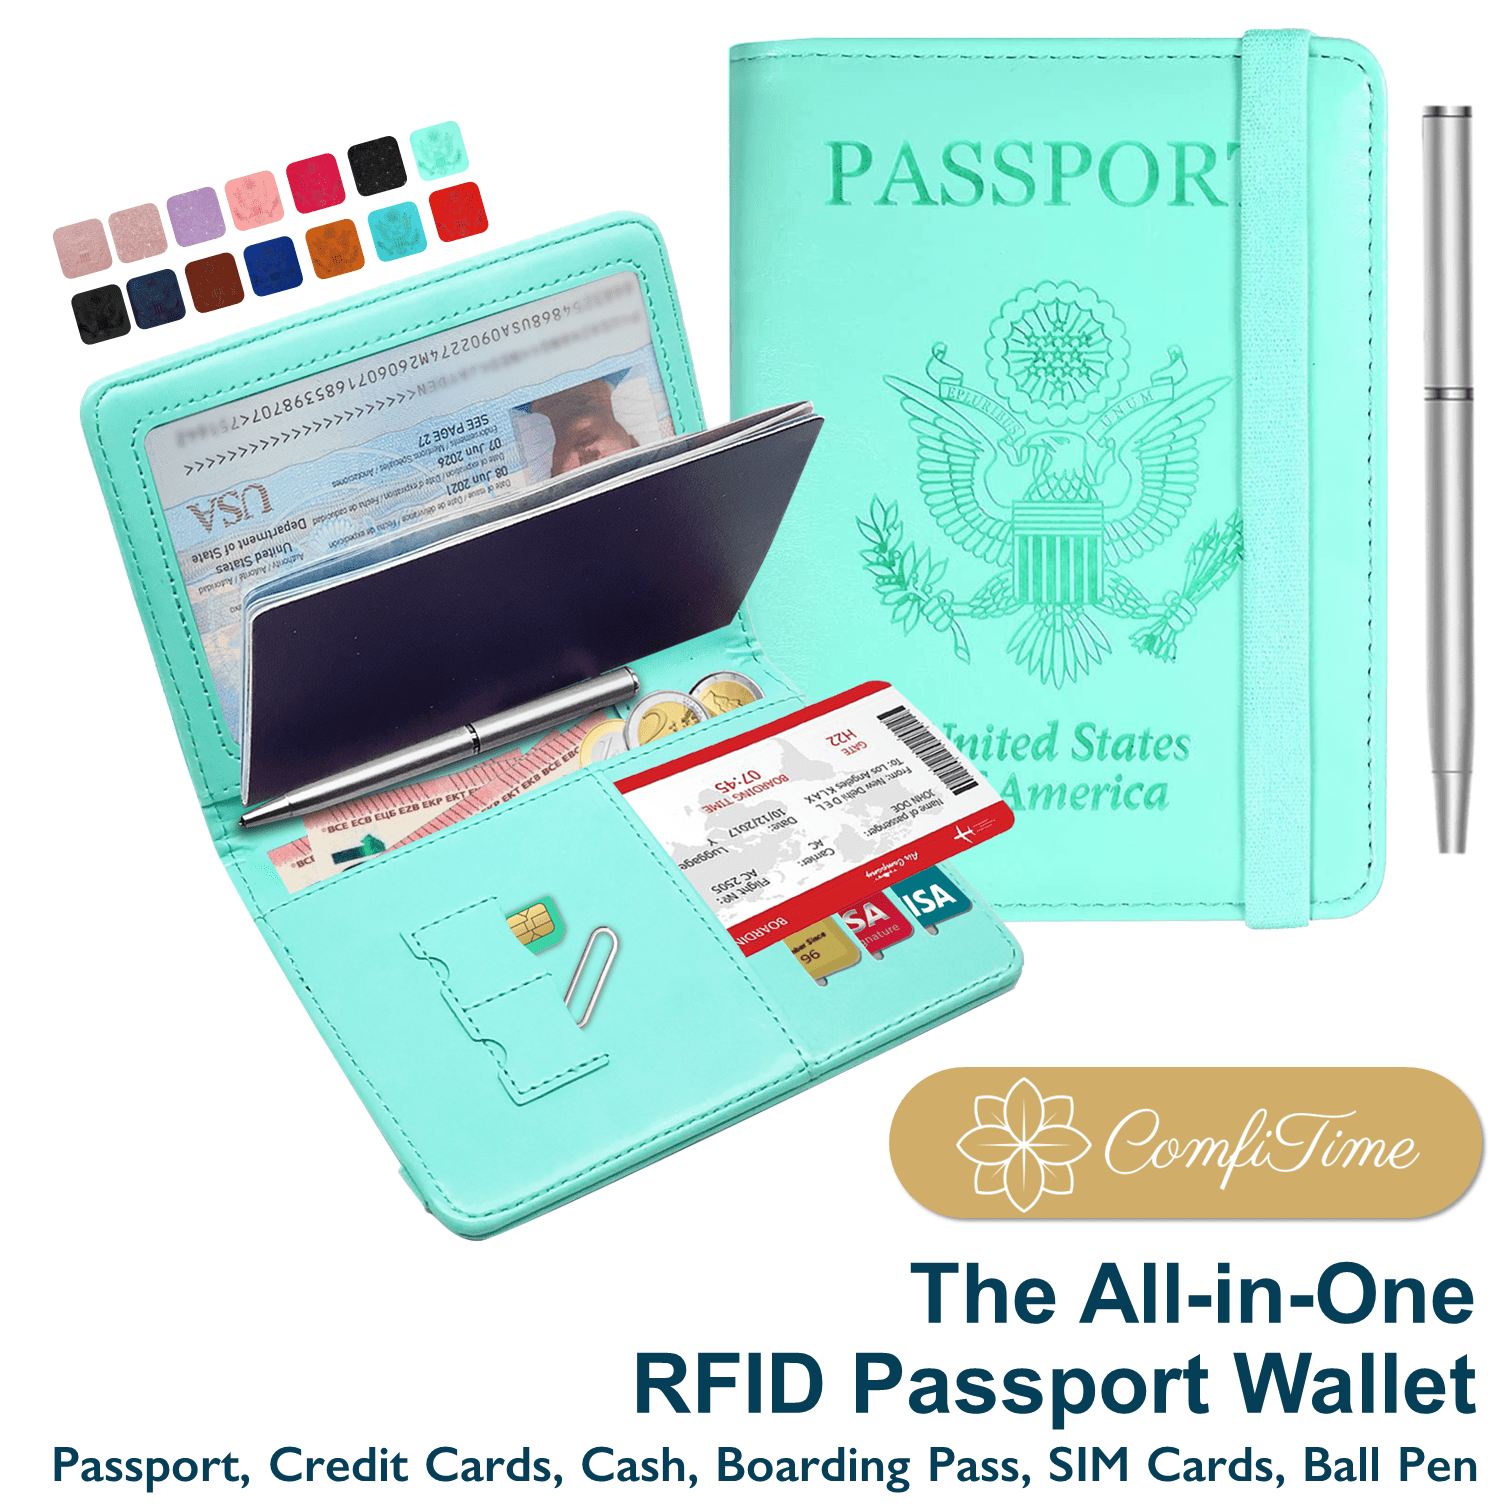 Passport Holder Card Slots,cute Passport Cover Waterproof Rfid